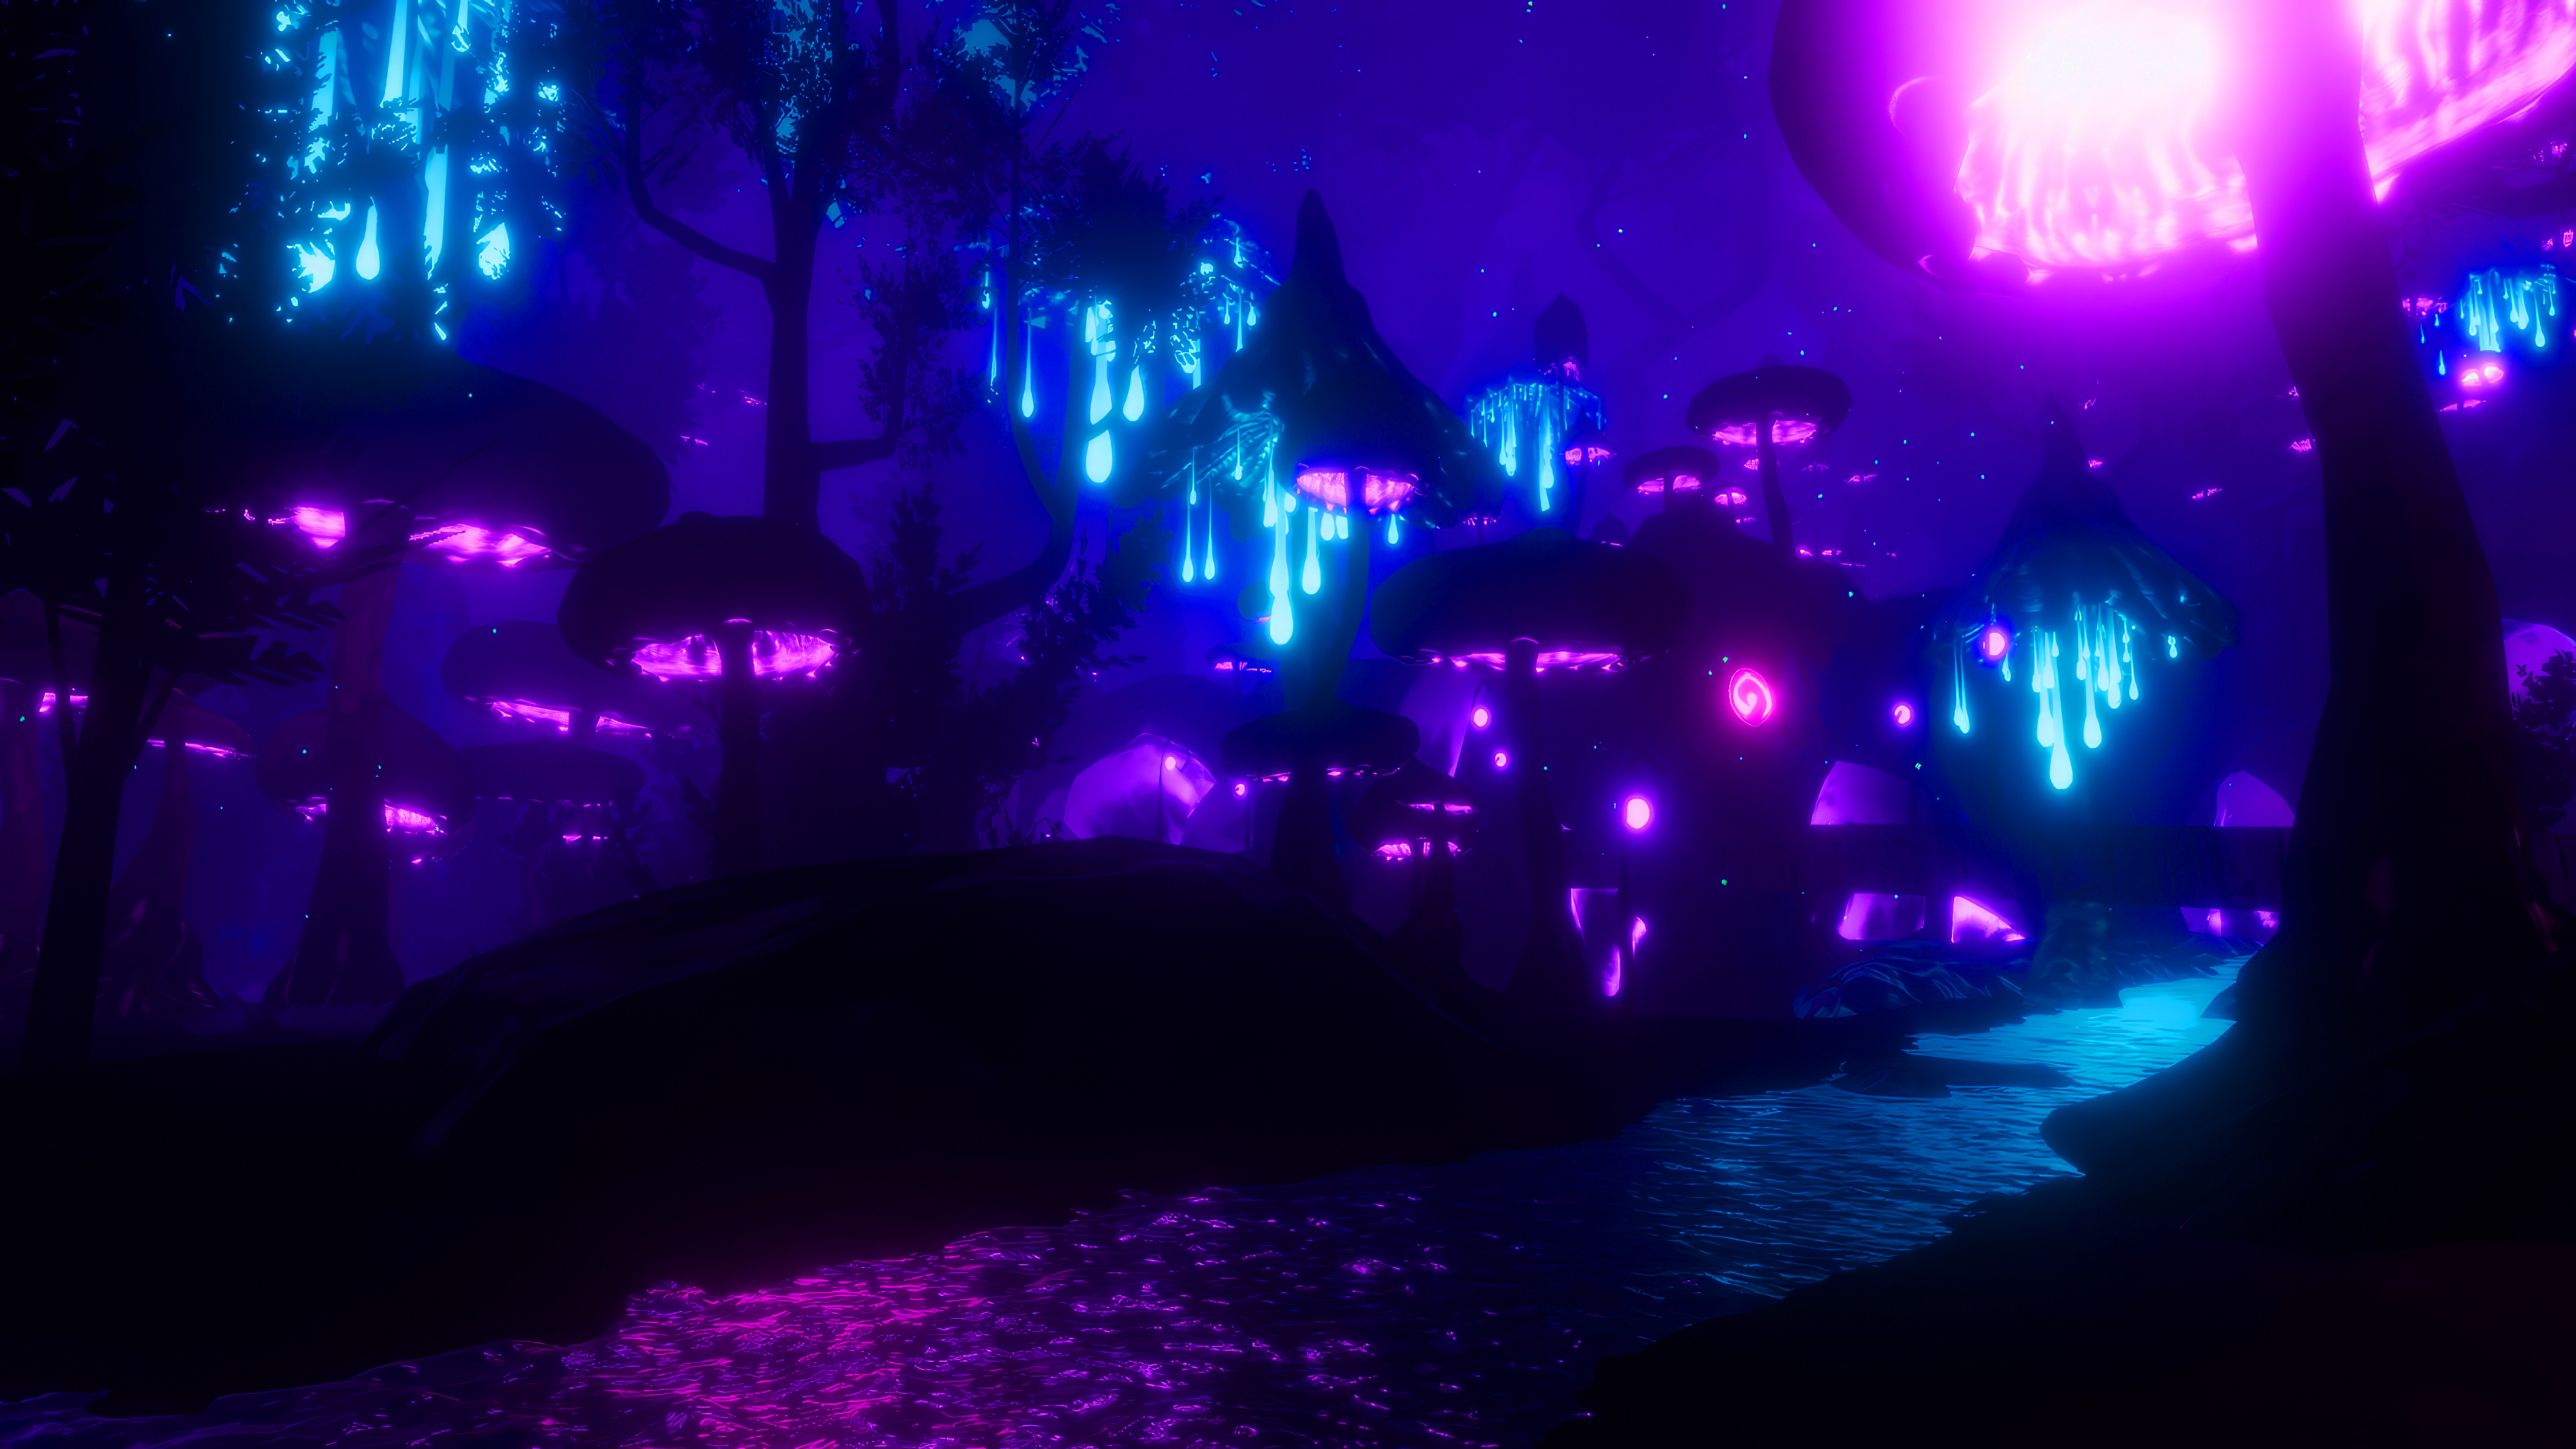 Mushroom Night Fantasy Art Water Blue Purple Neon Bright Turquoise Sea Video Game Art 3840x2160